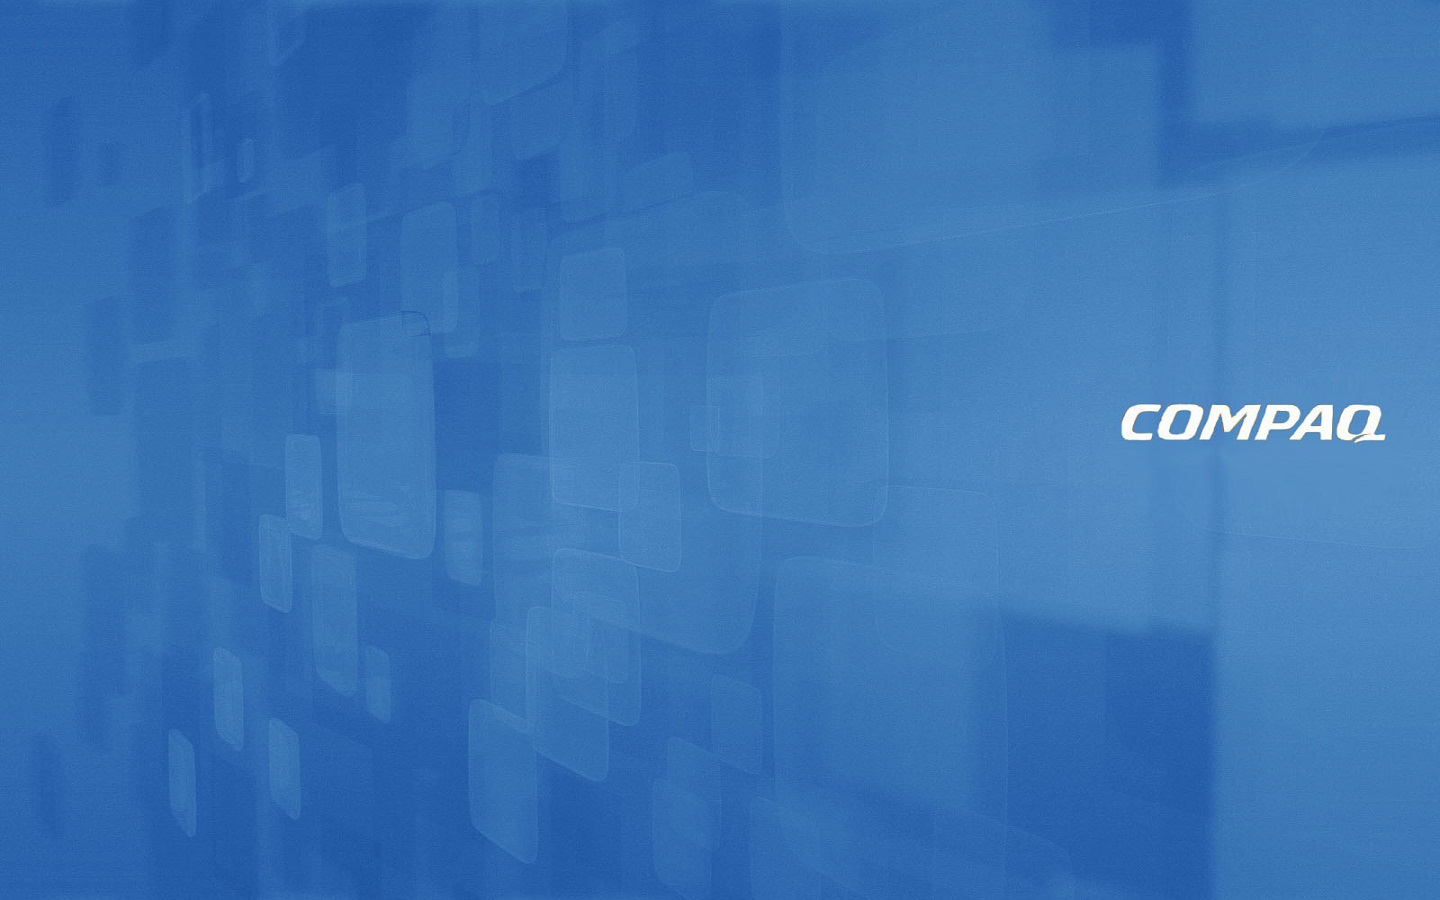 Compaq Logo compaq logo wallpaper – Logo Database